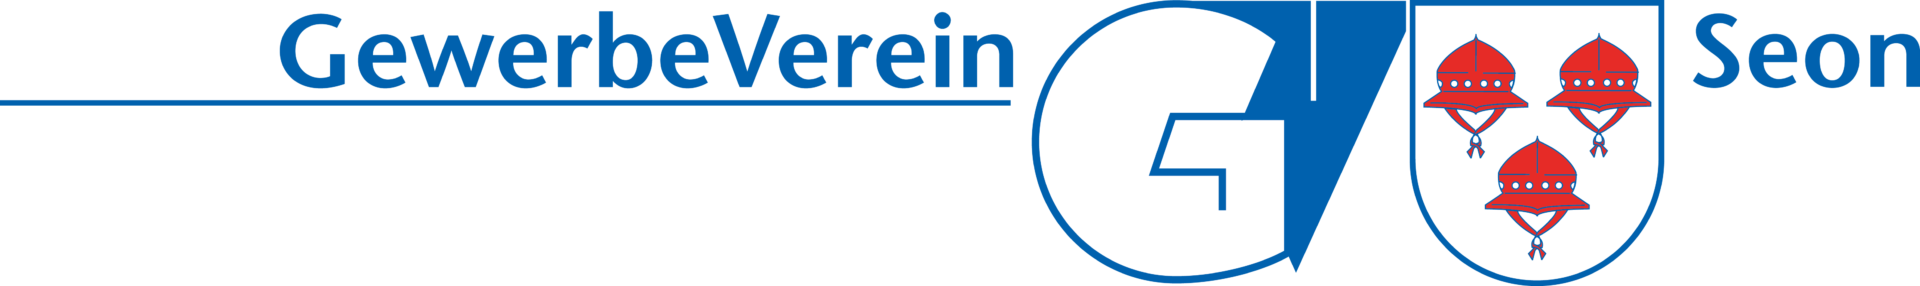 Gewerbeverein Seon Logo